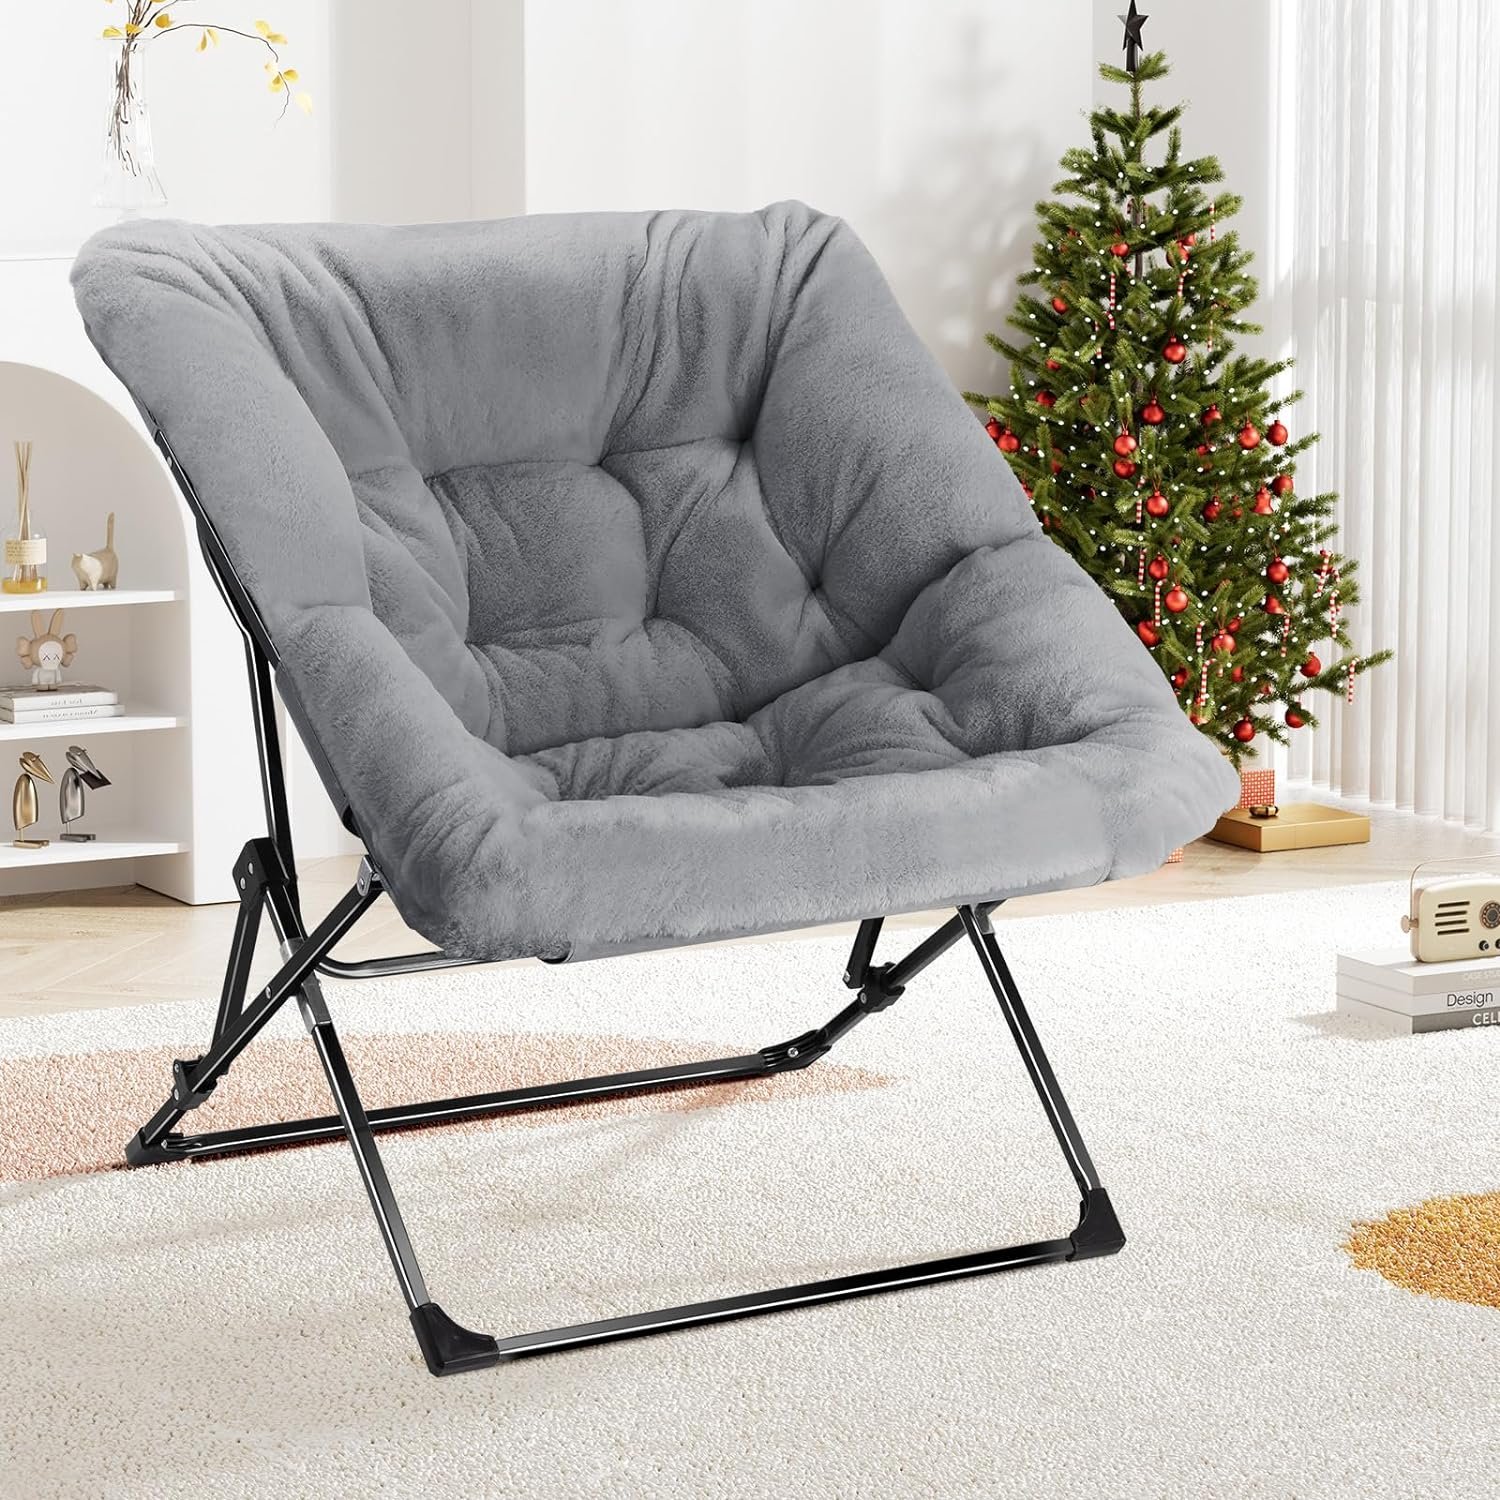 Folding Faux Fur Lounge Chair Review